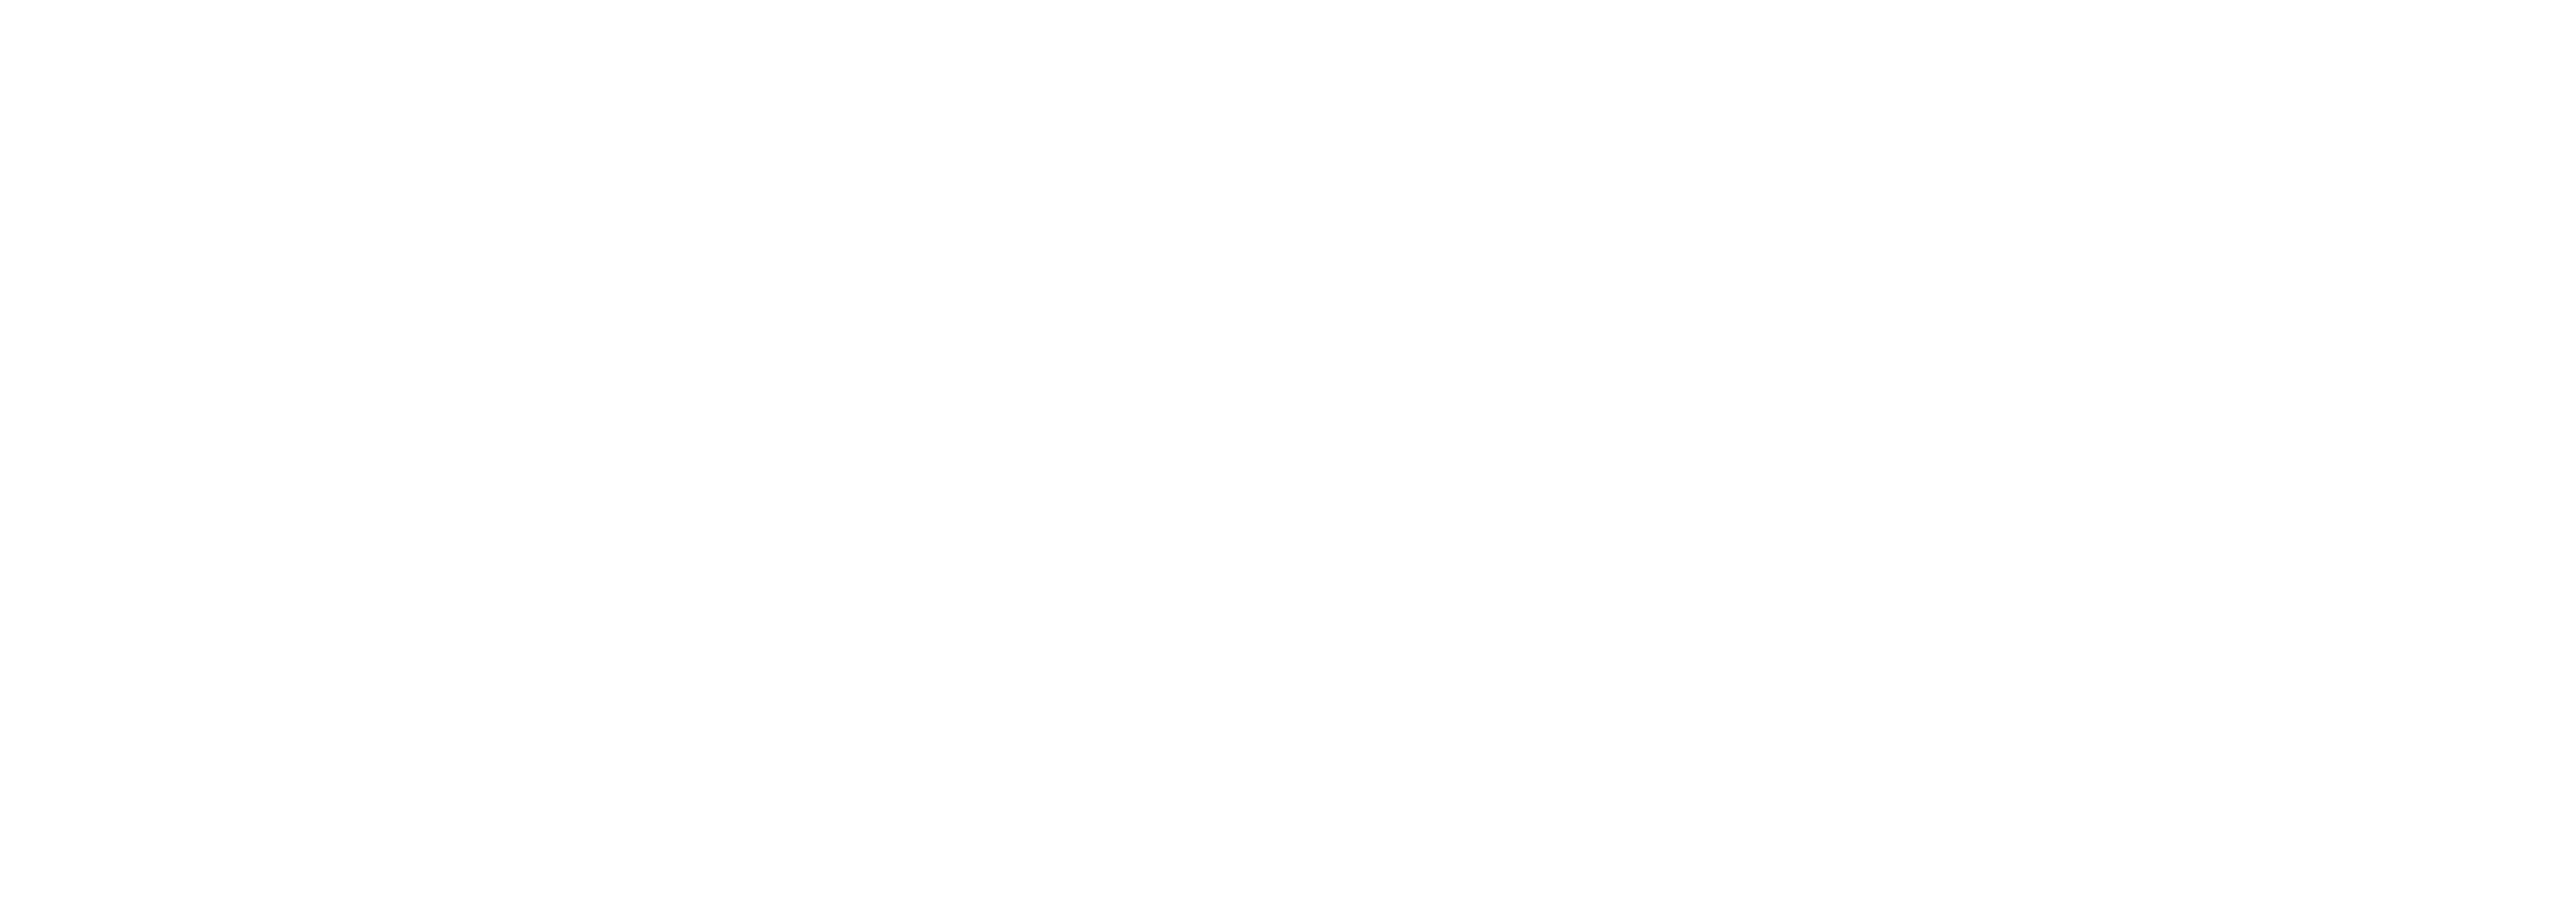 March 2020 - Big Brothers Big Sisters of Halton and Hamilton